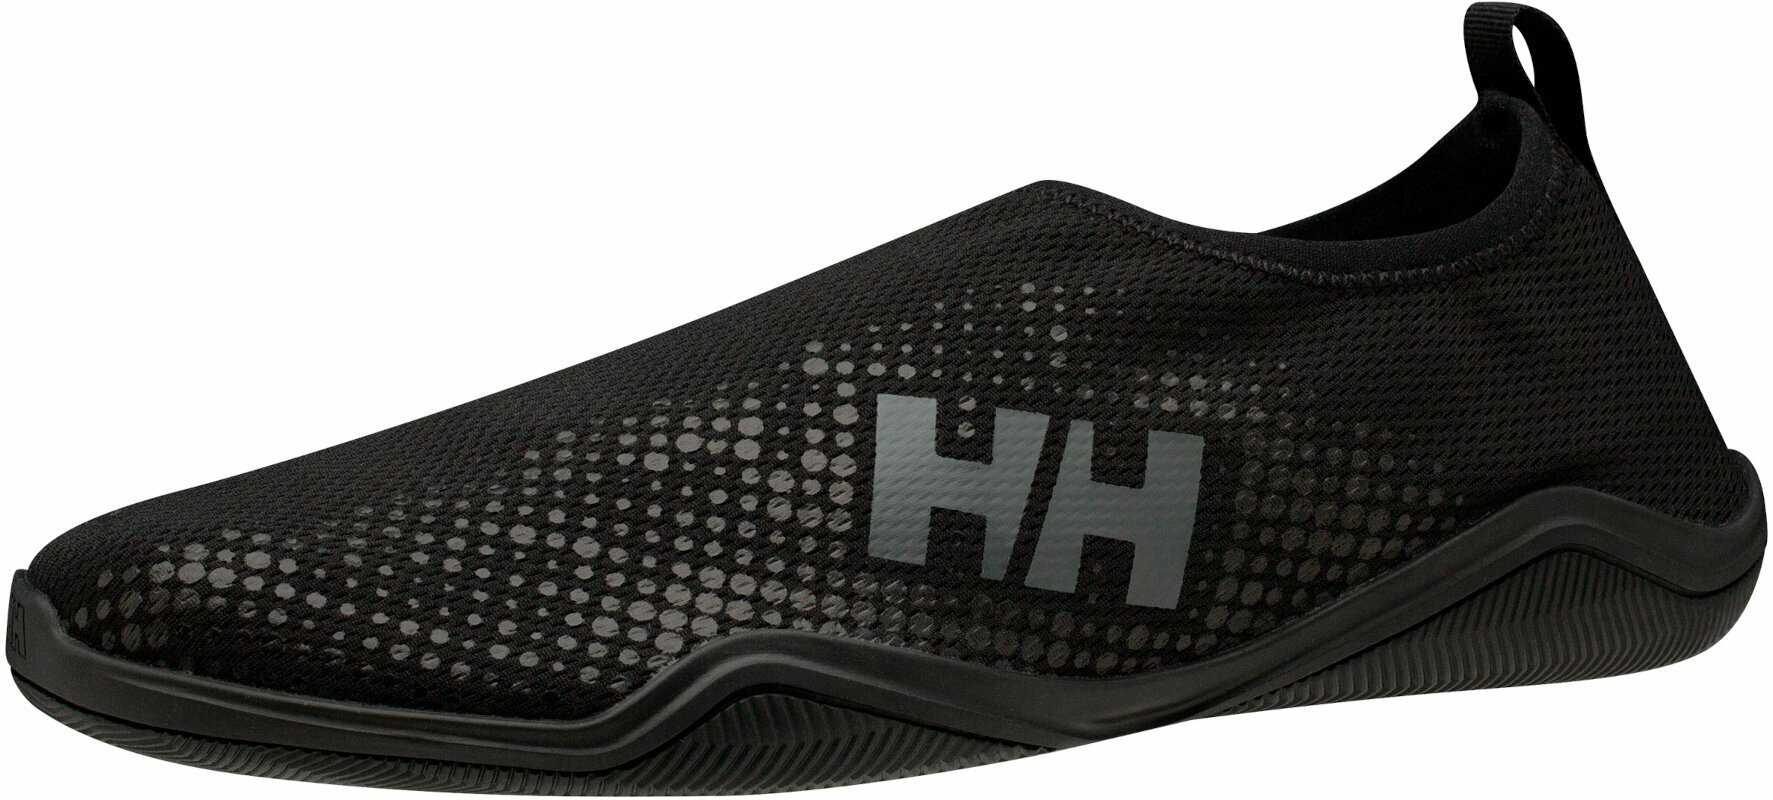 Buty żeglarskie Helly Hansen Men's Crest Watermoc Black/Charcoal 45